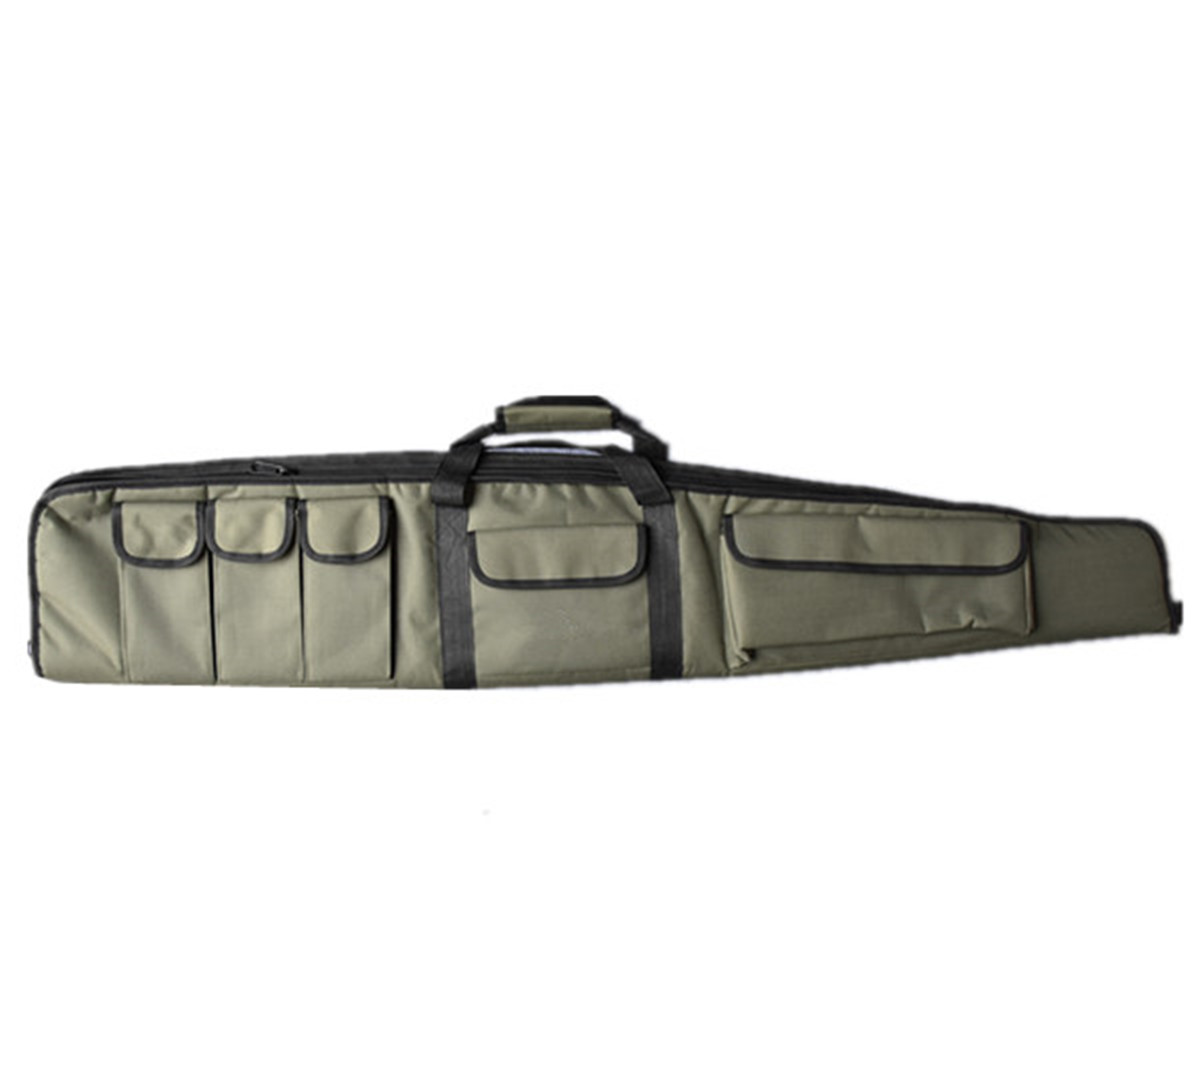 Pangangaso Double Gun Bag 52.5 pulgada ang haba CORDURA Nylon na tela